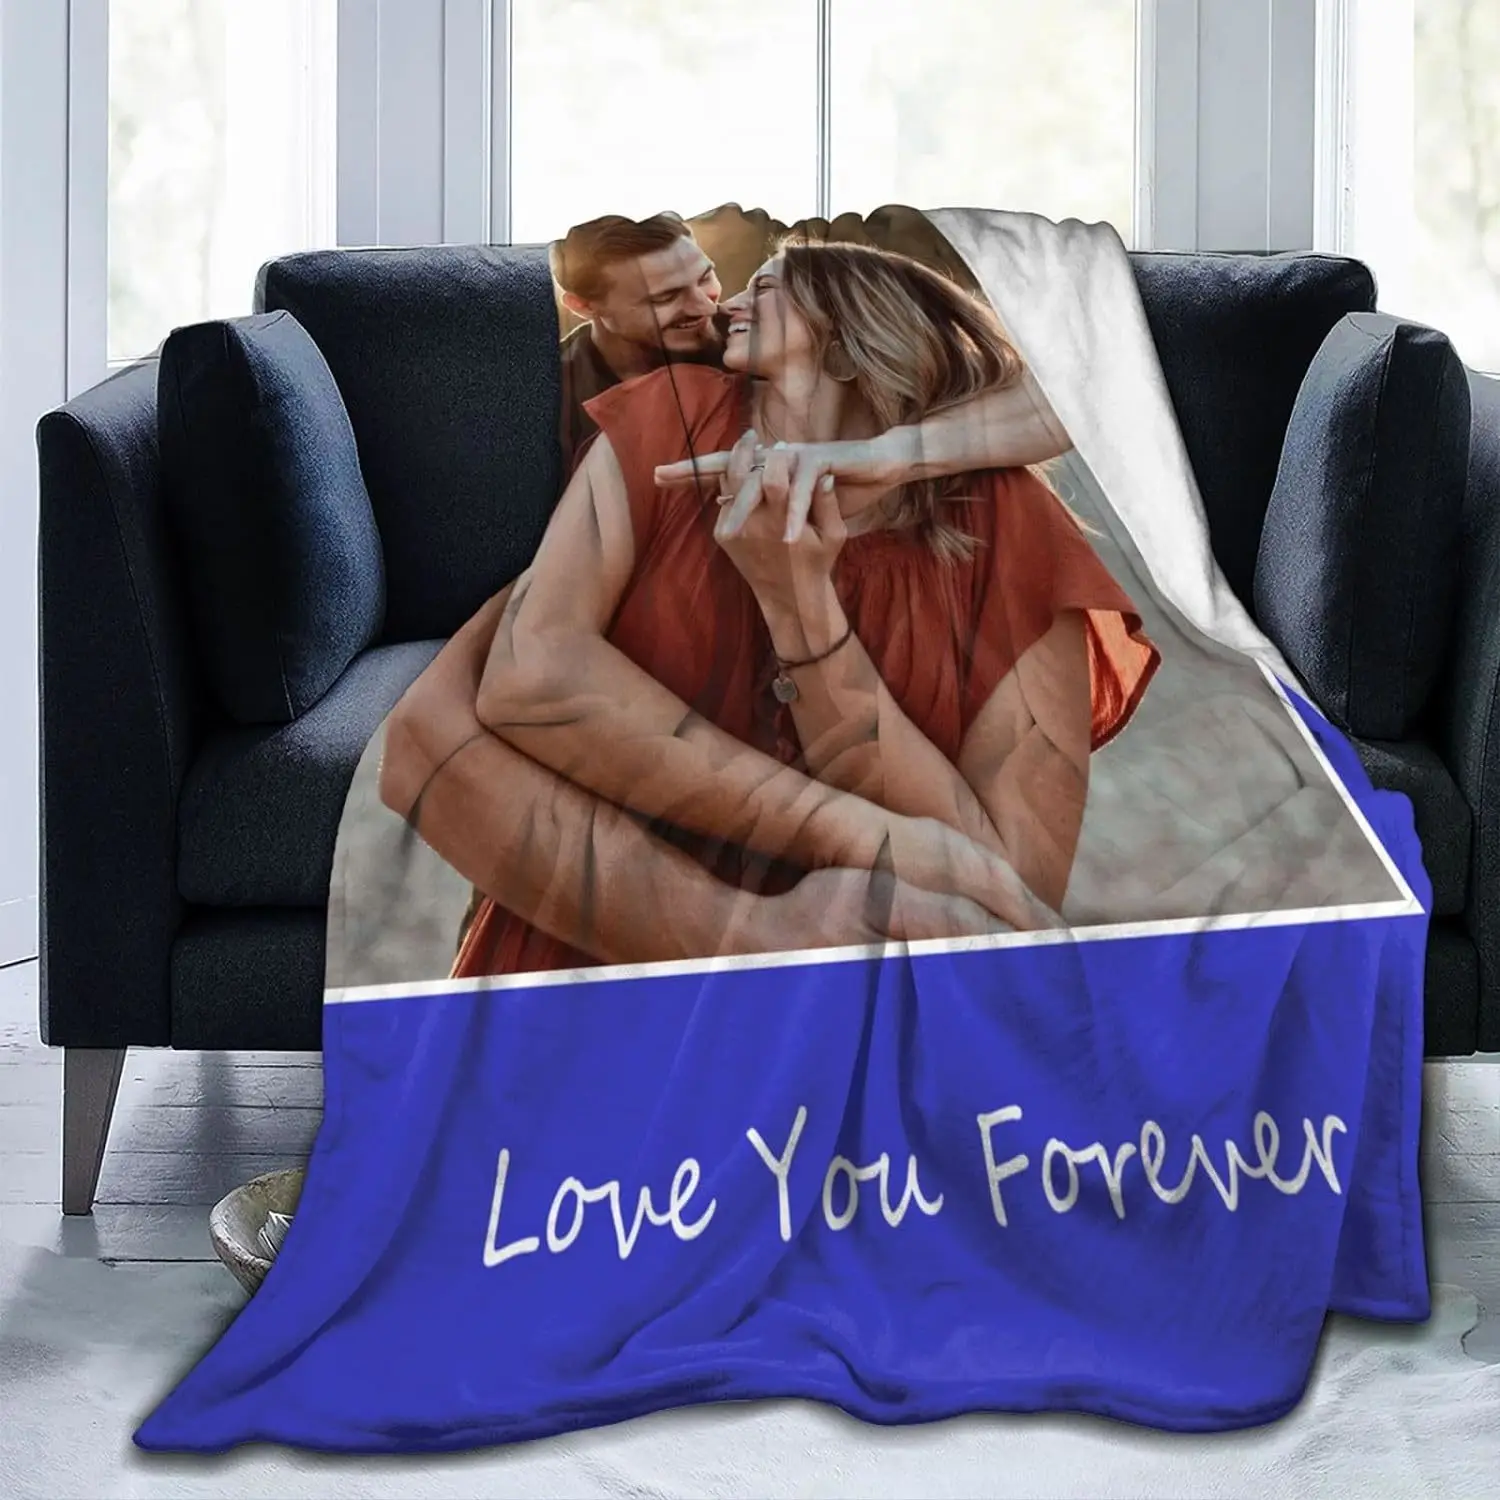 Фланелевое Одеяло с текстом и фотографиями, 1 фото